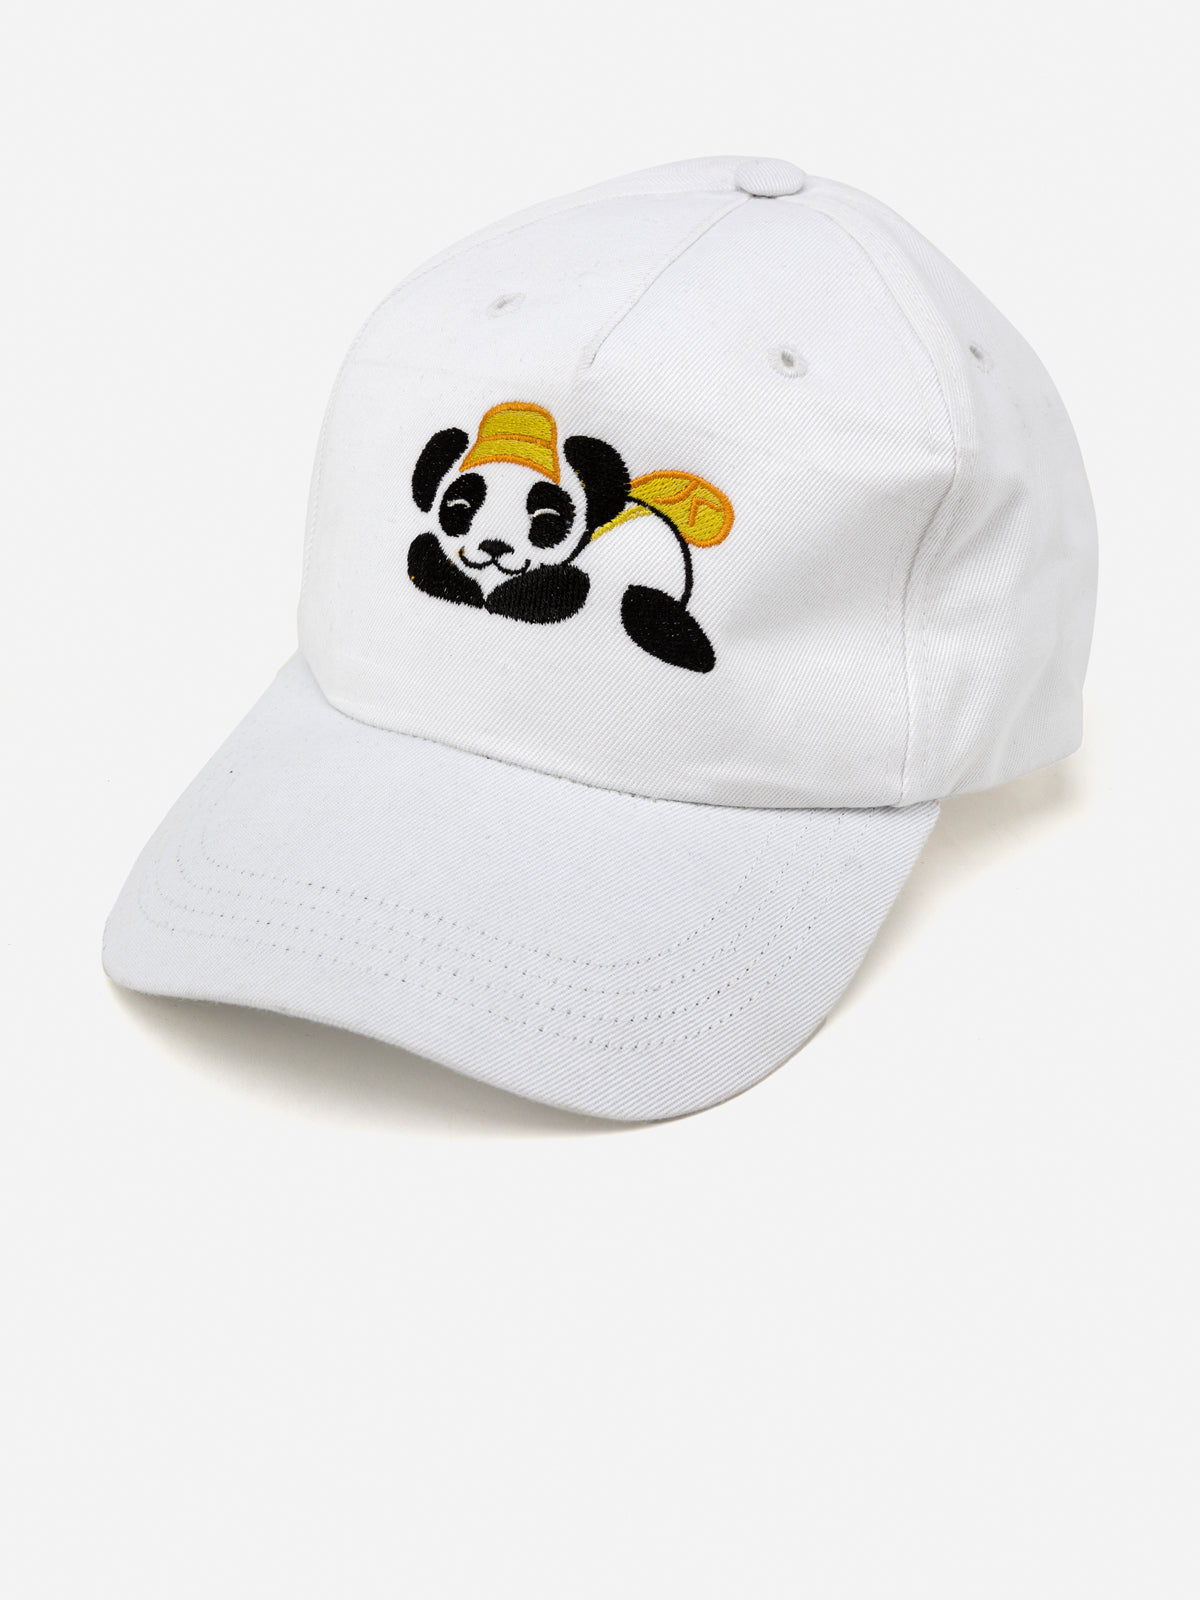 Lazy panda logo embriodery white baseball cap